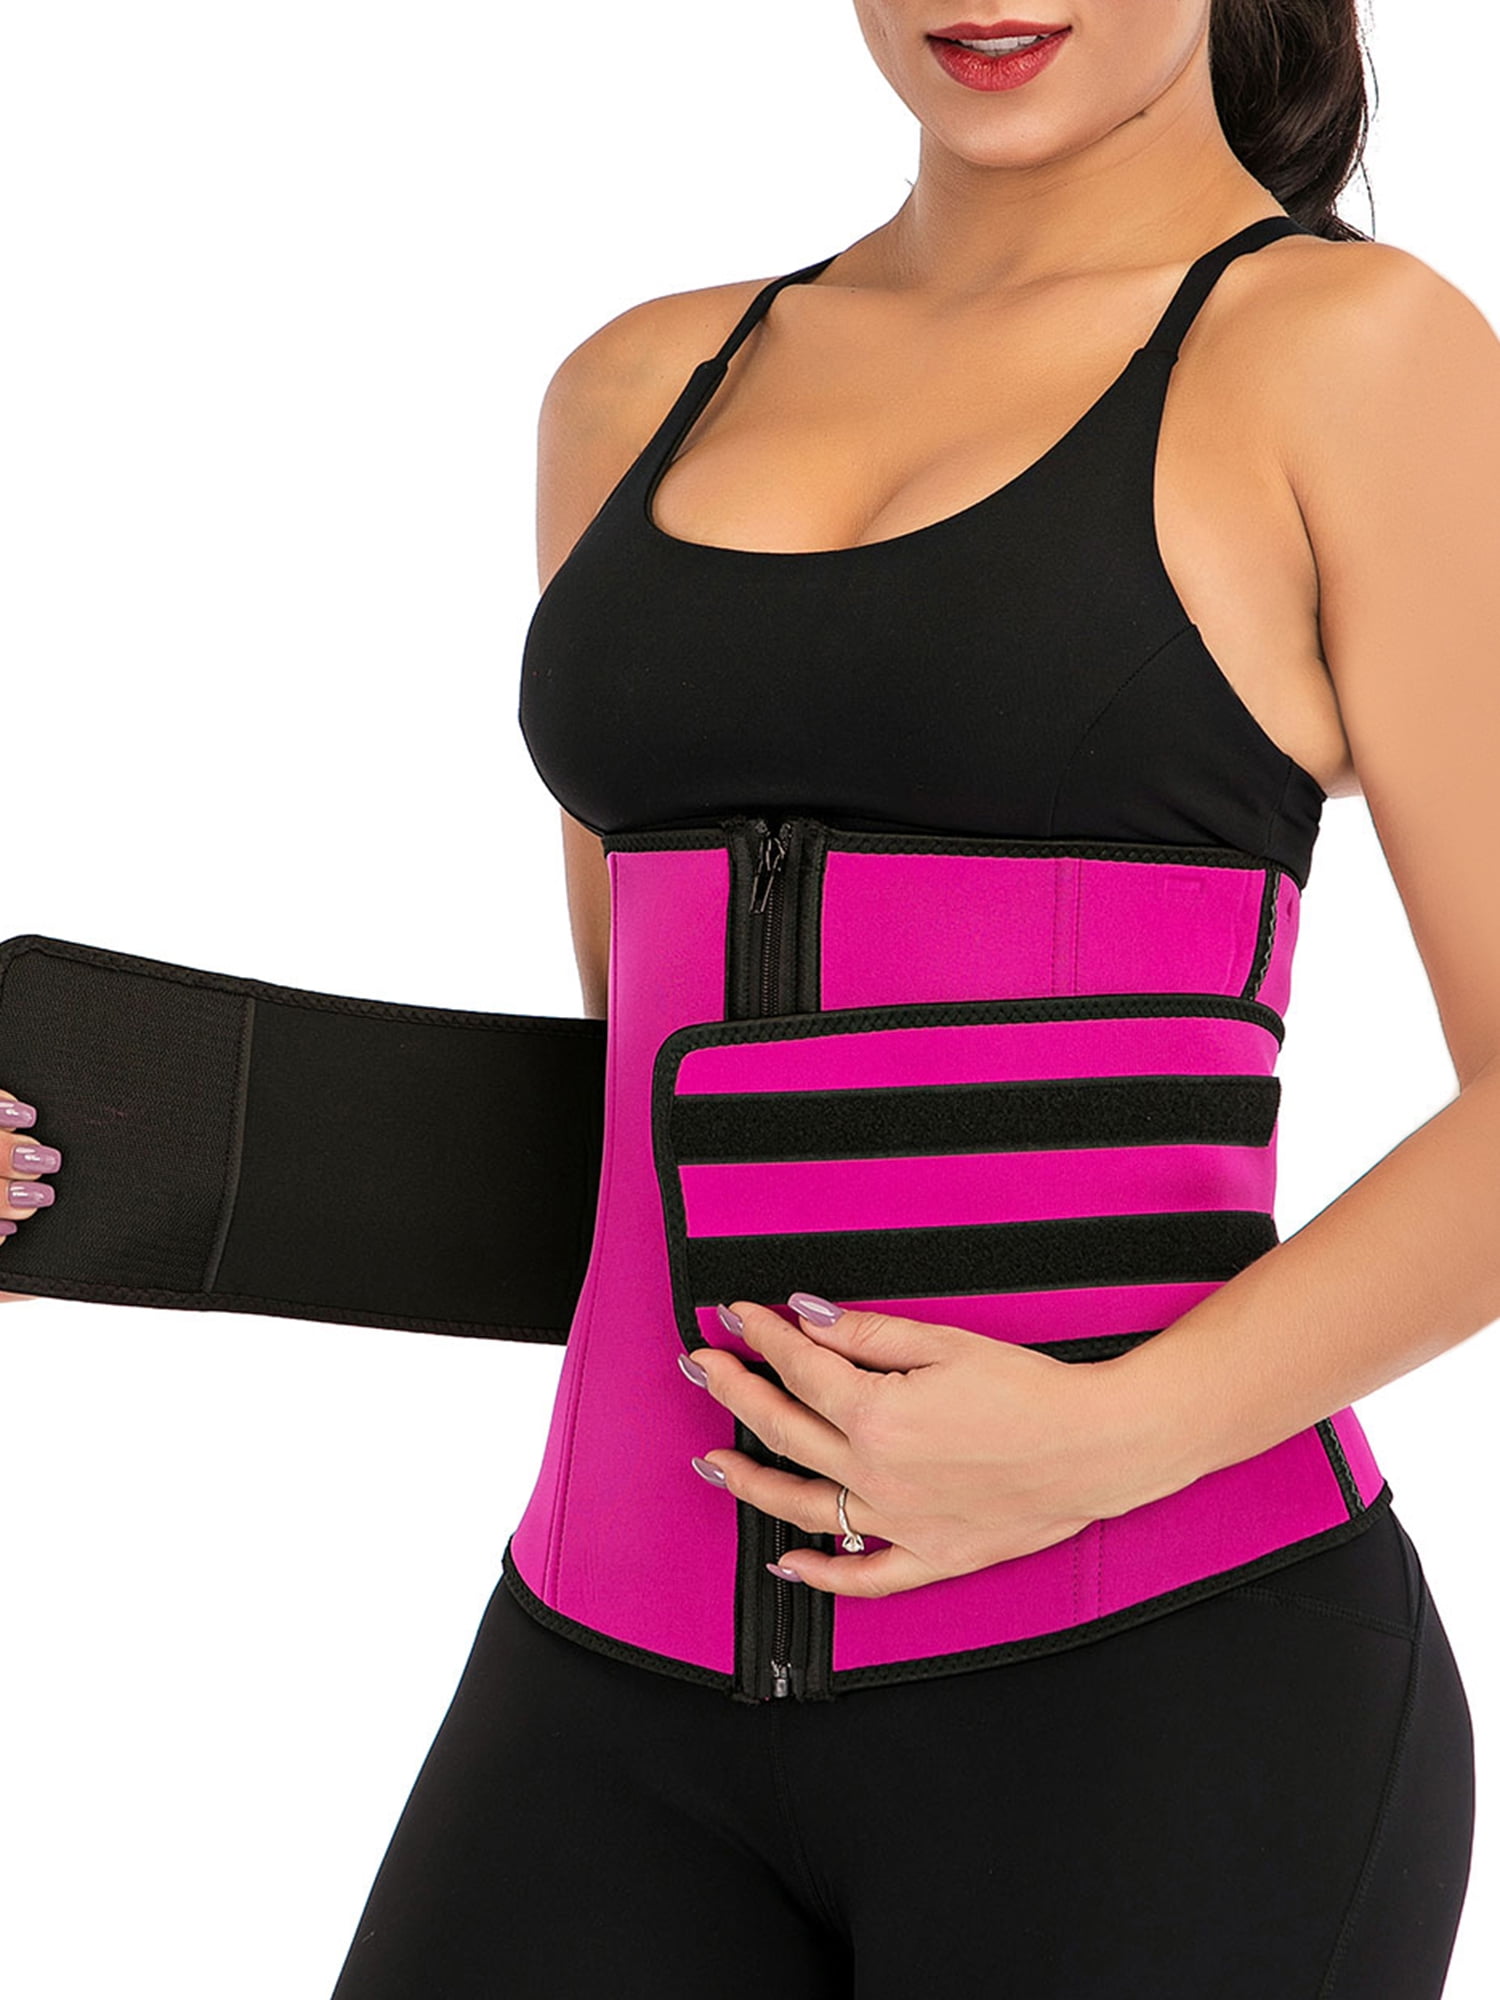 M xoxing Waist Shapewear Belt Body Shaper Belly Band Tummy Control Girdle Wrap Postpartum Support Slimming Fitness 